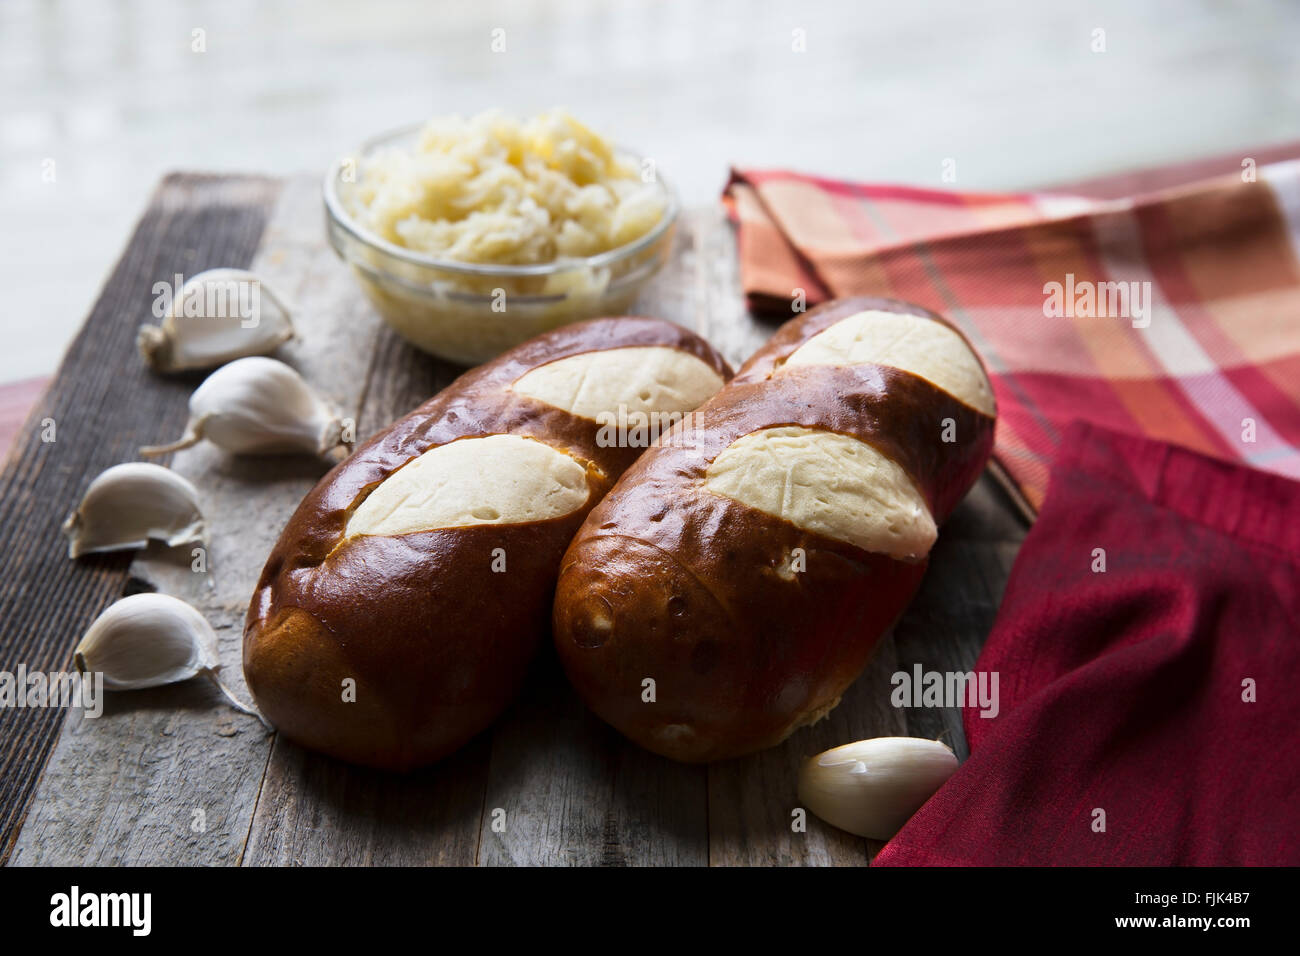 Bread made in German soft pretzel style with sauerkraut and garlic. Stock Photo